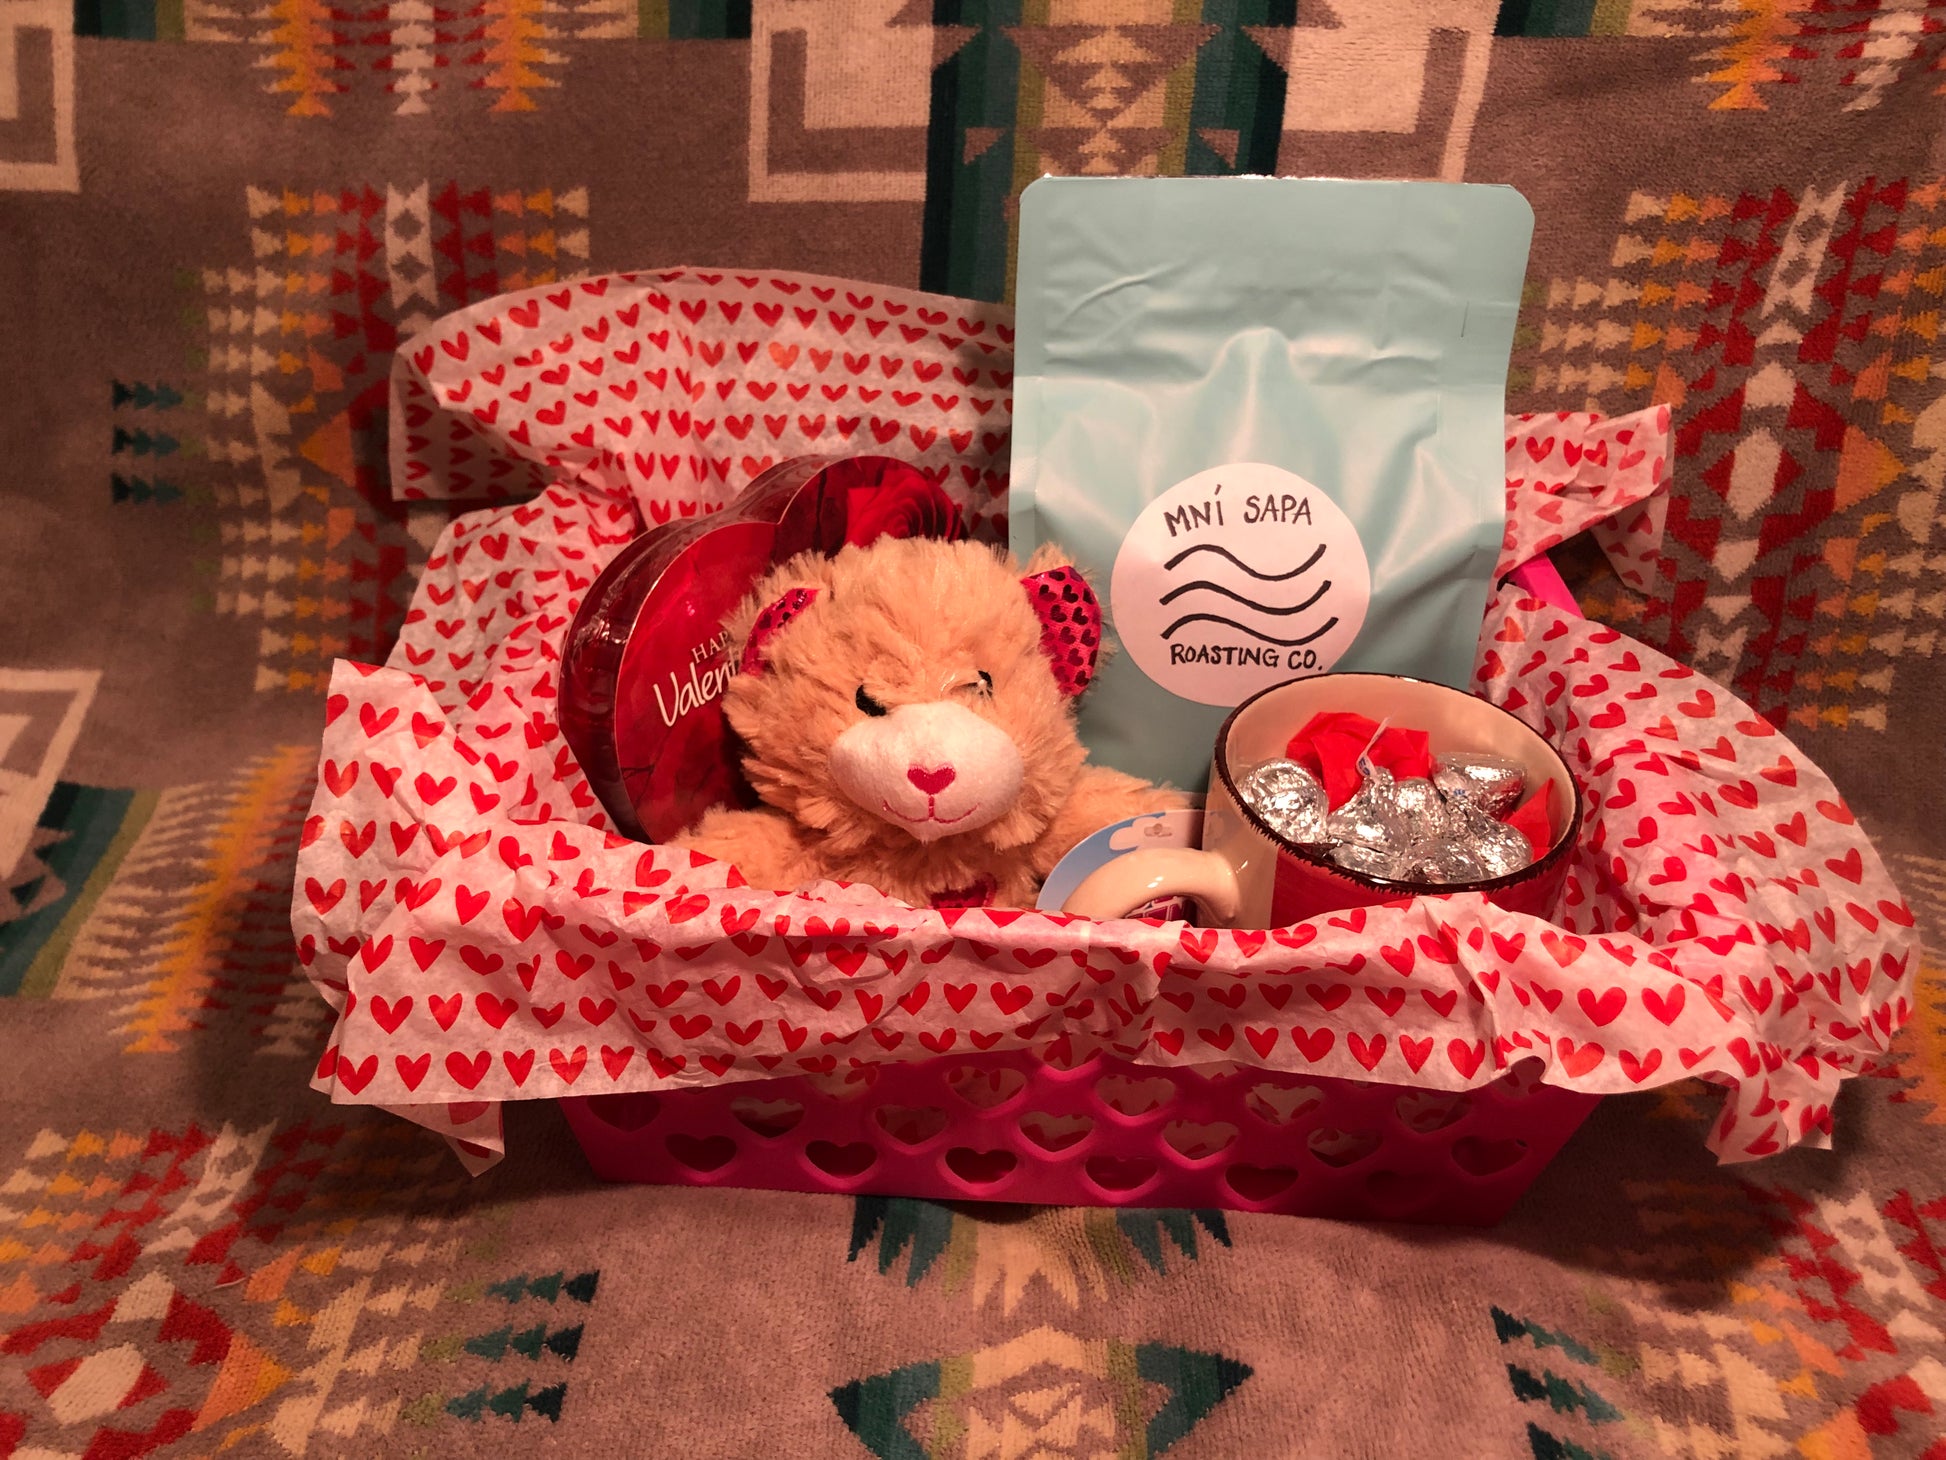 Pictured: basket with coffee, mug, chocolates and a plush animal